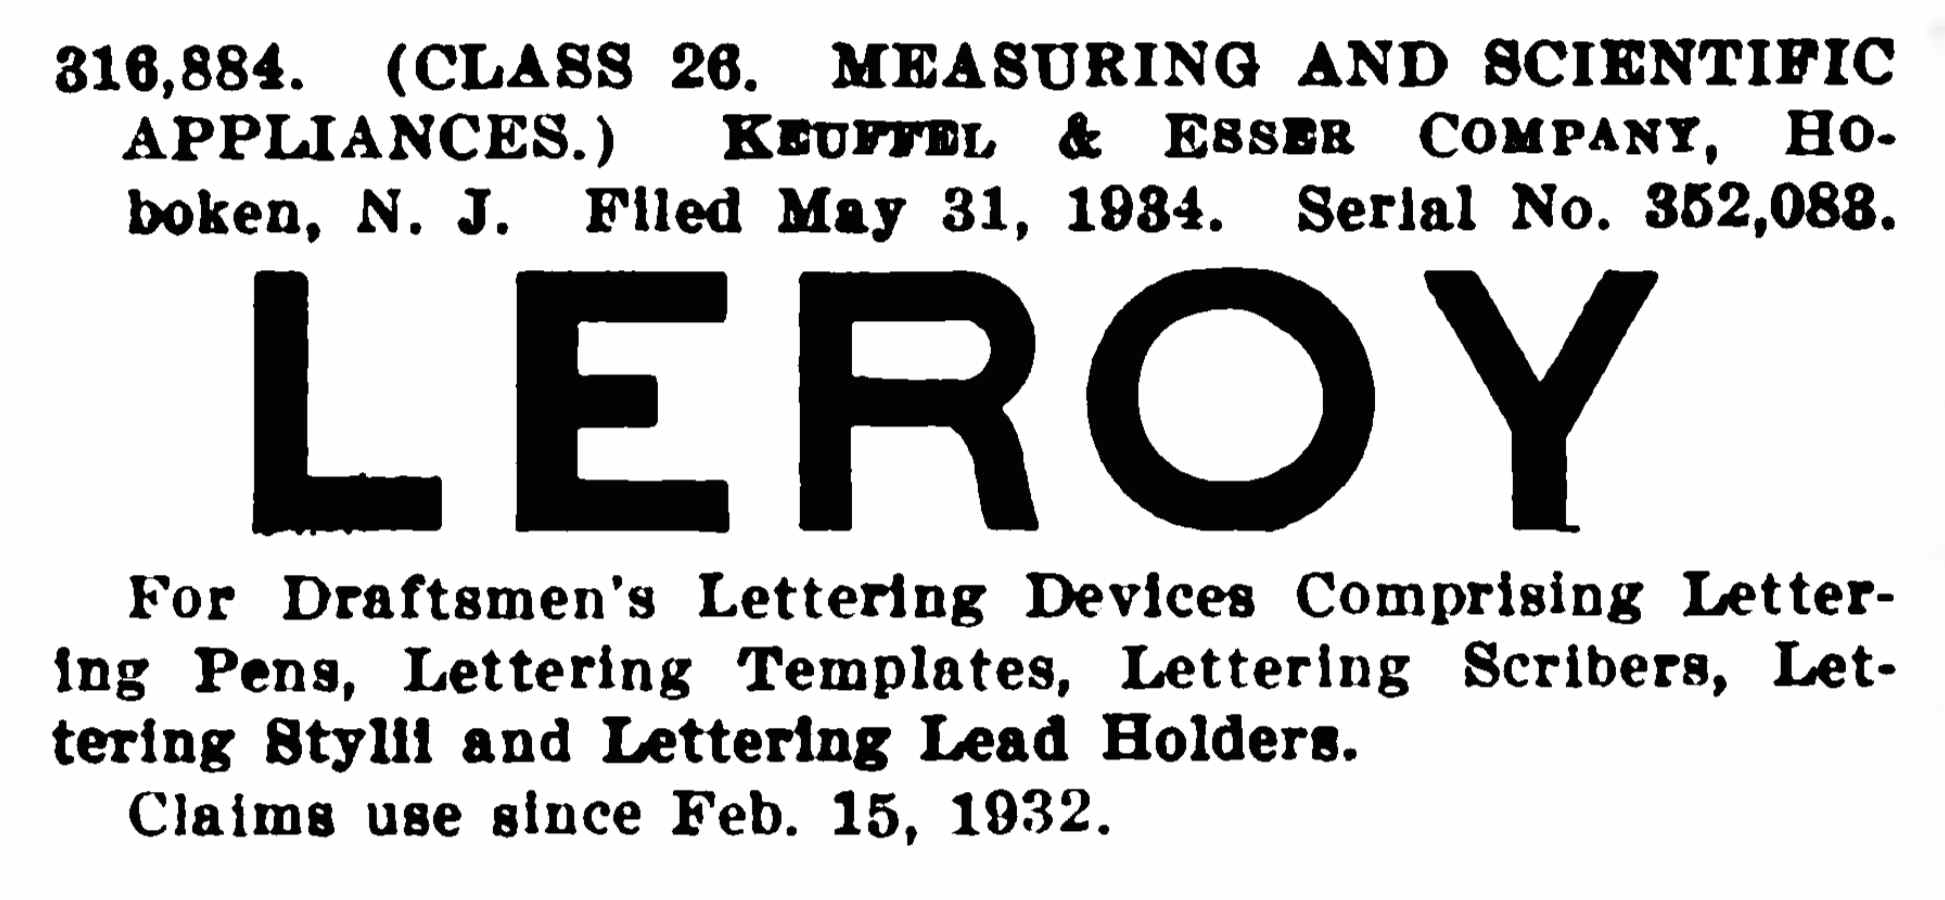 1950 Keuffel & Esser Co. Leroy Lettering Set